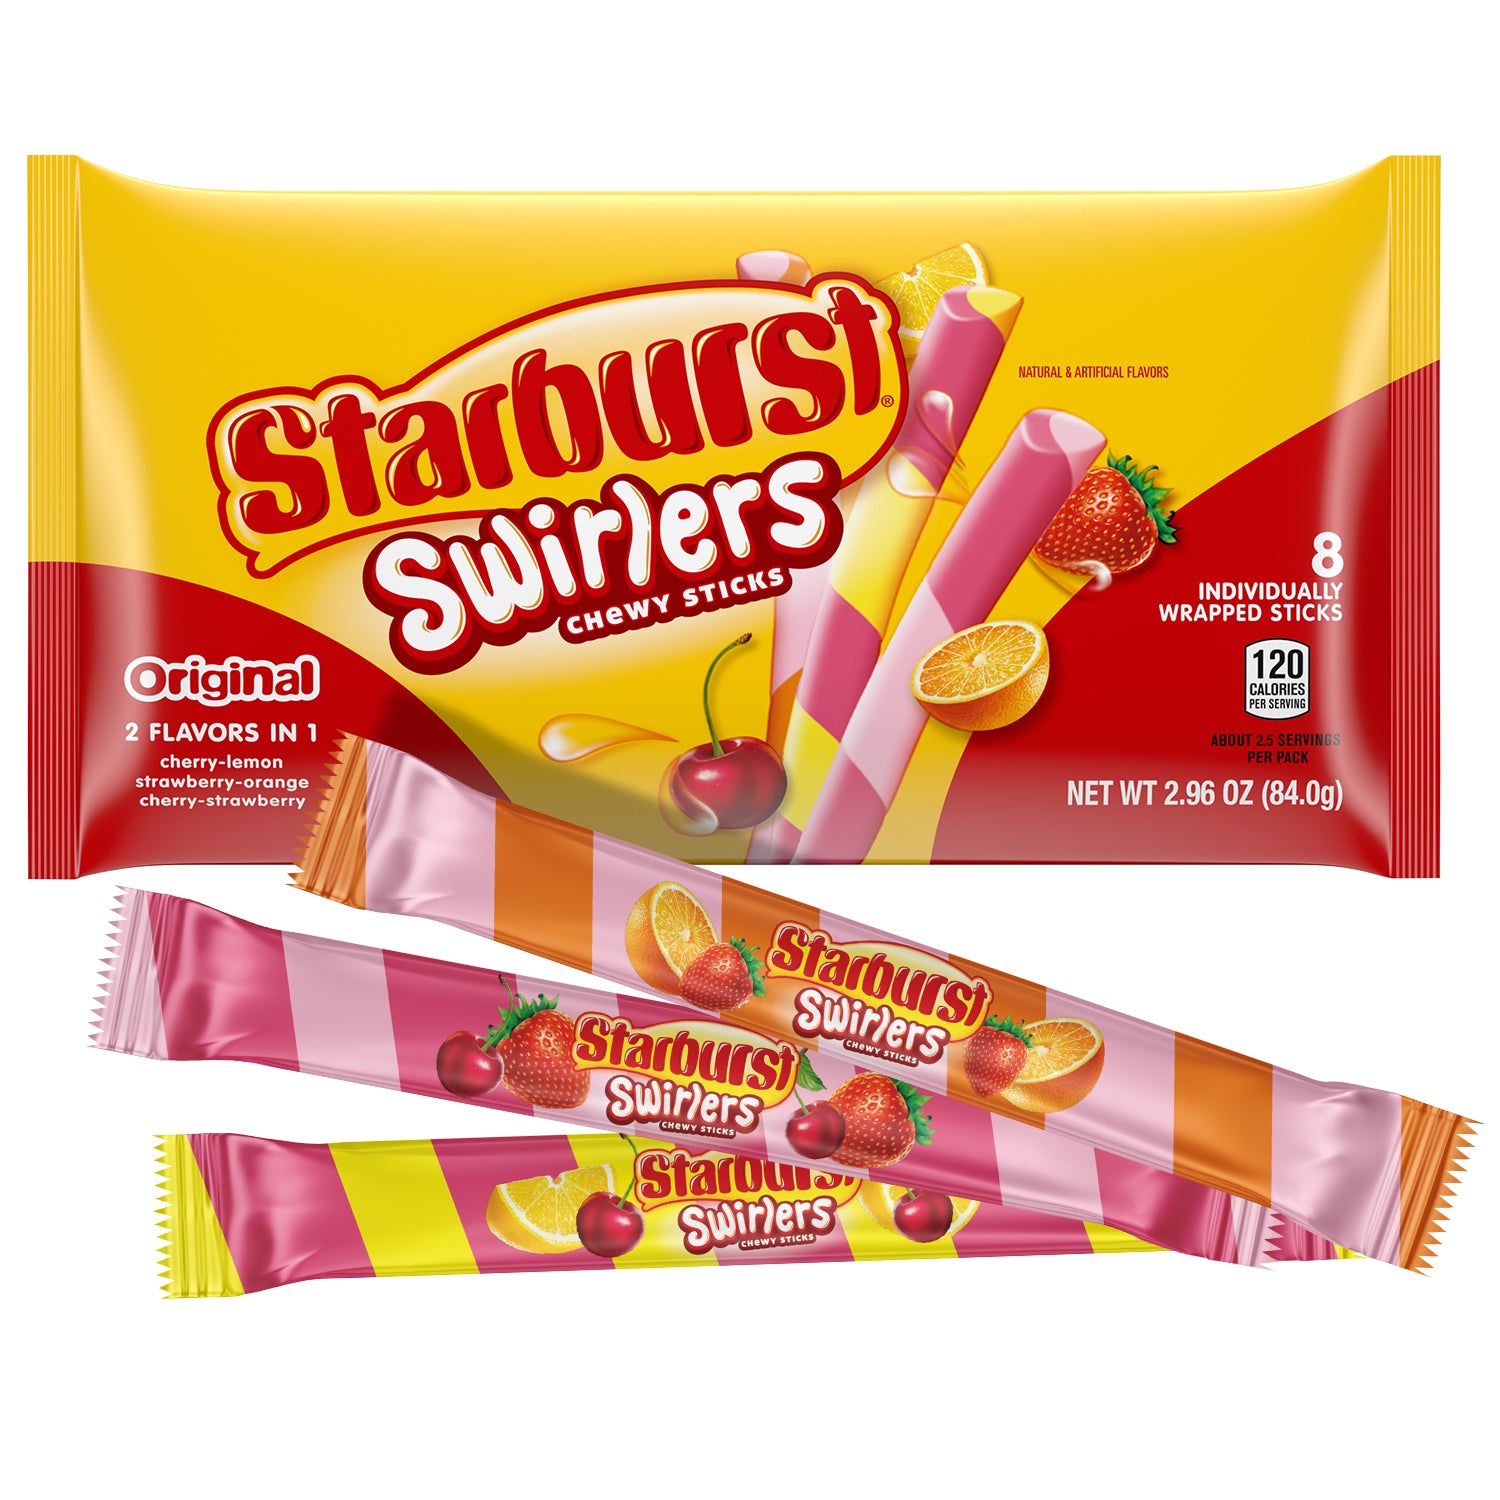 Starburst Swirlers Chewy Sticks Candy Share Size 2.96 oz Bag